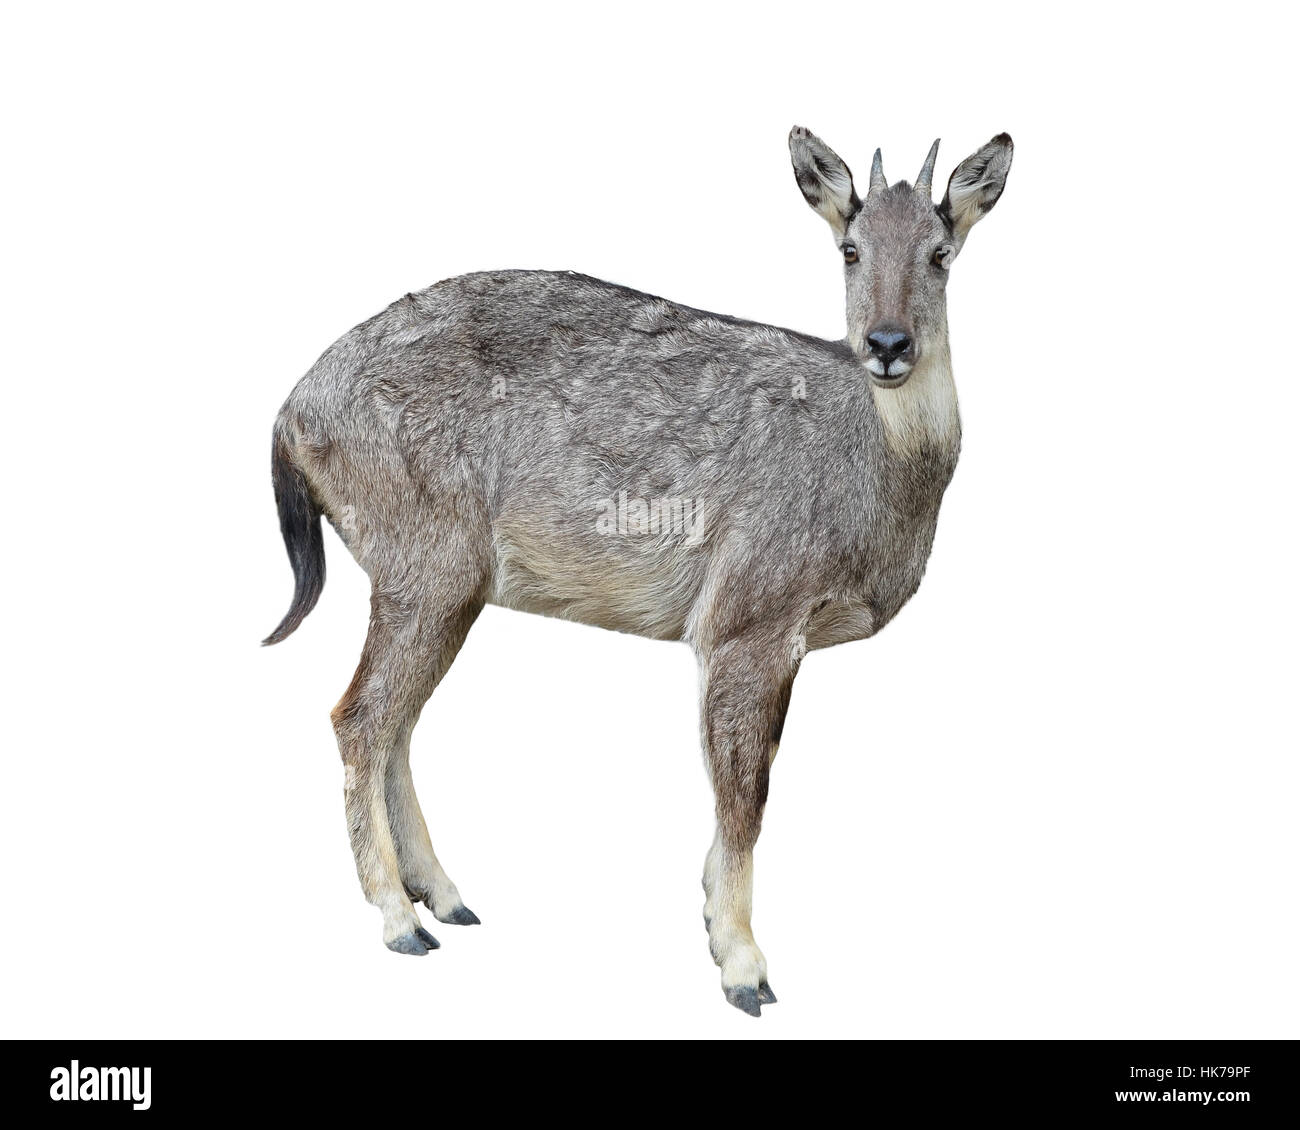 isolated, animal, mammal, fur, rare, wildlife, antelope, white, grey, gray, Stock Photo